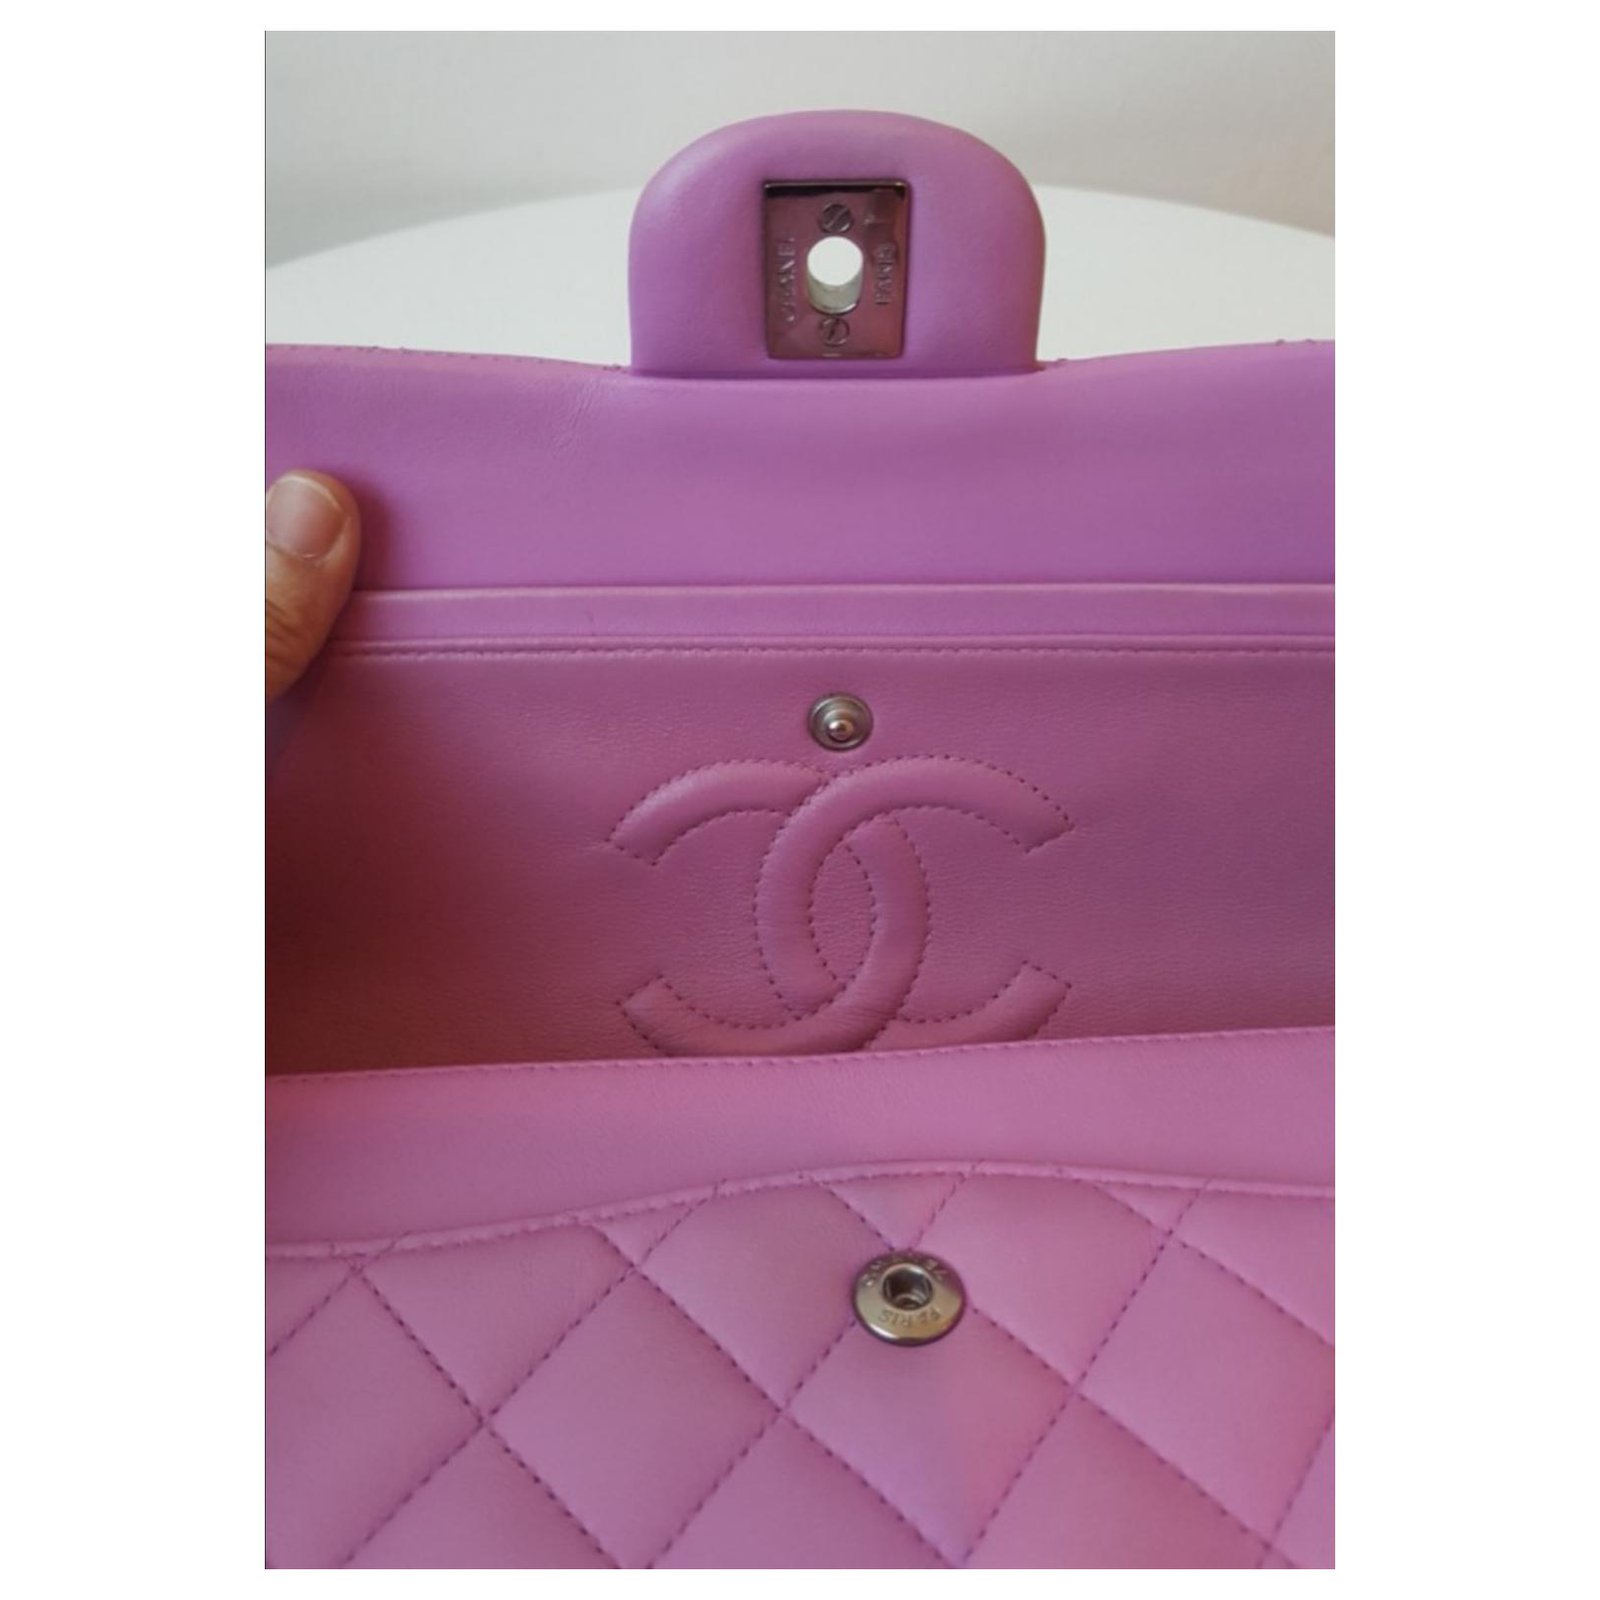 chanel flap bag pastel pink